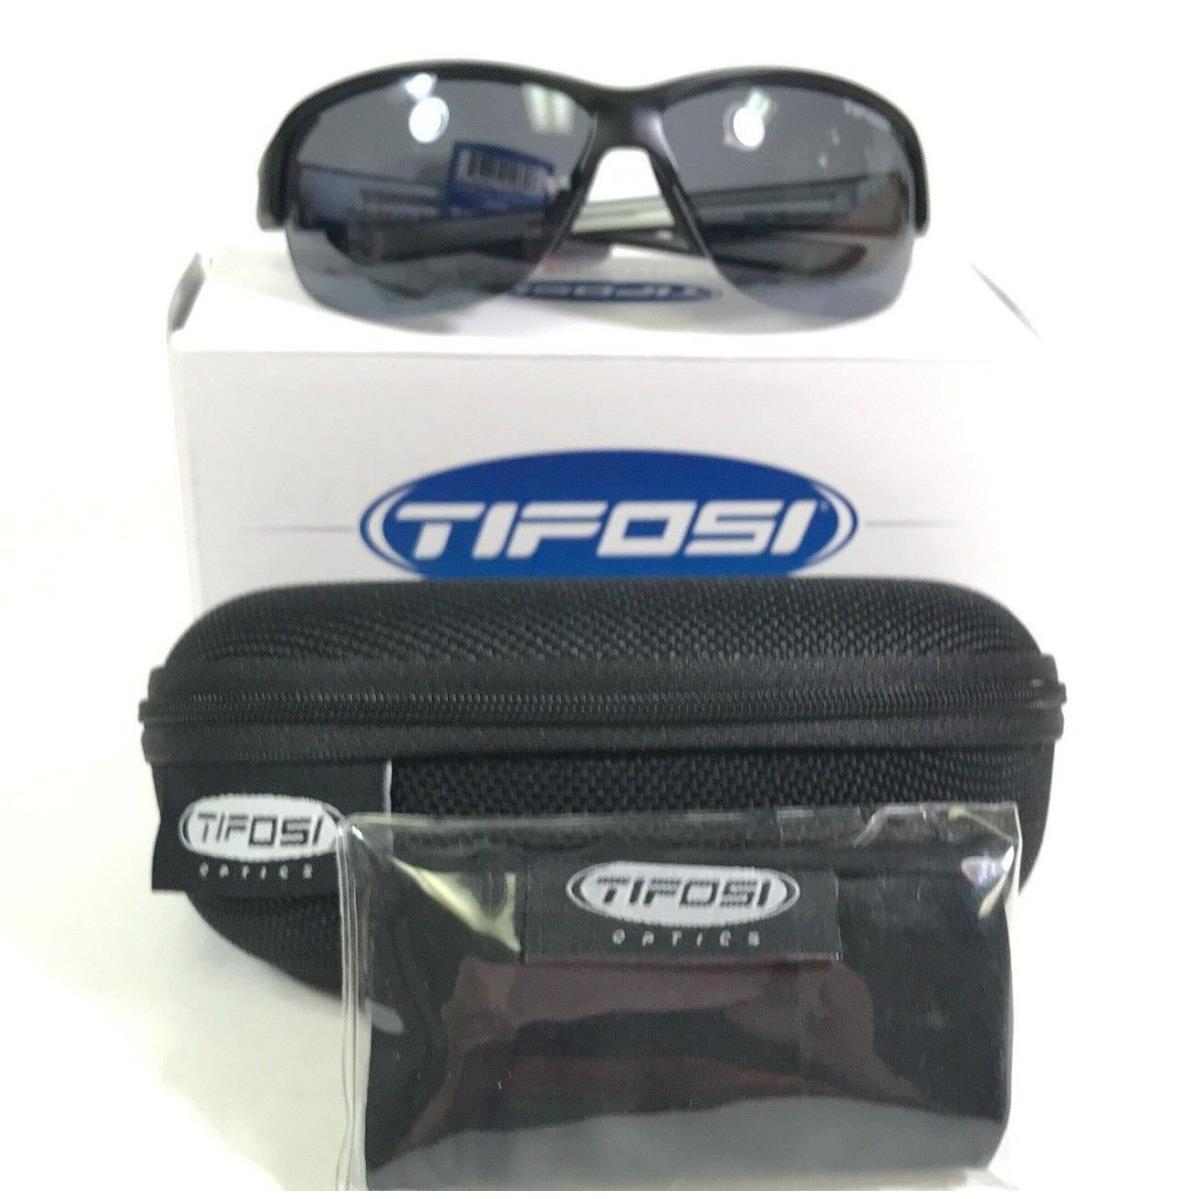 Tifosi Sunglasses Mira Black White Square Frames with Blue Lenses 68-15-120